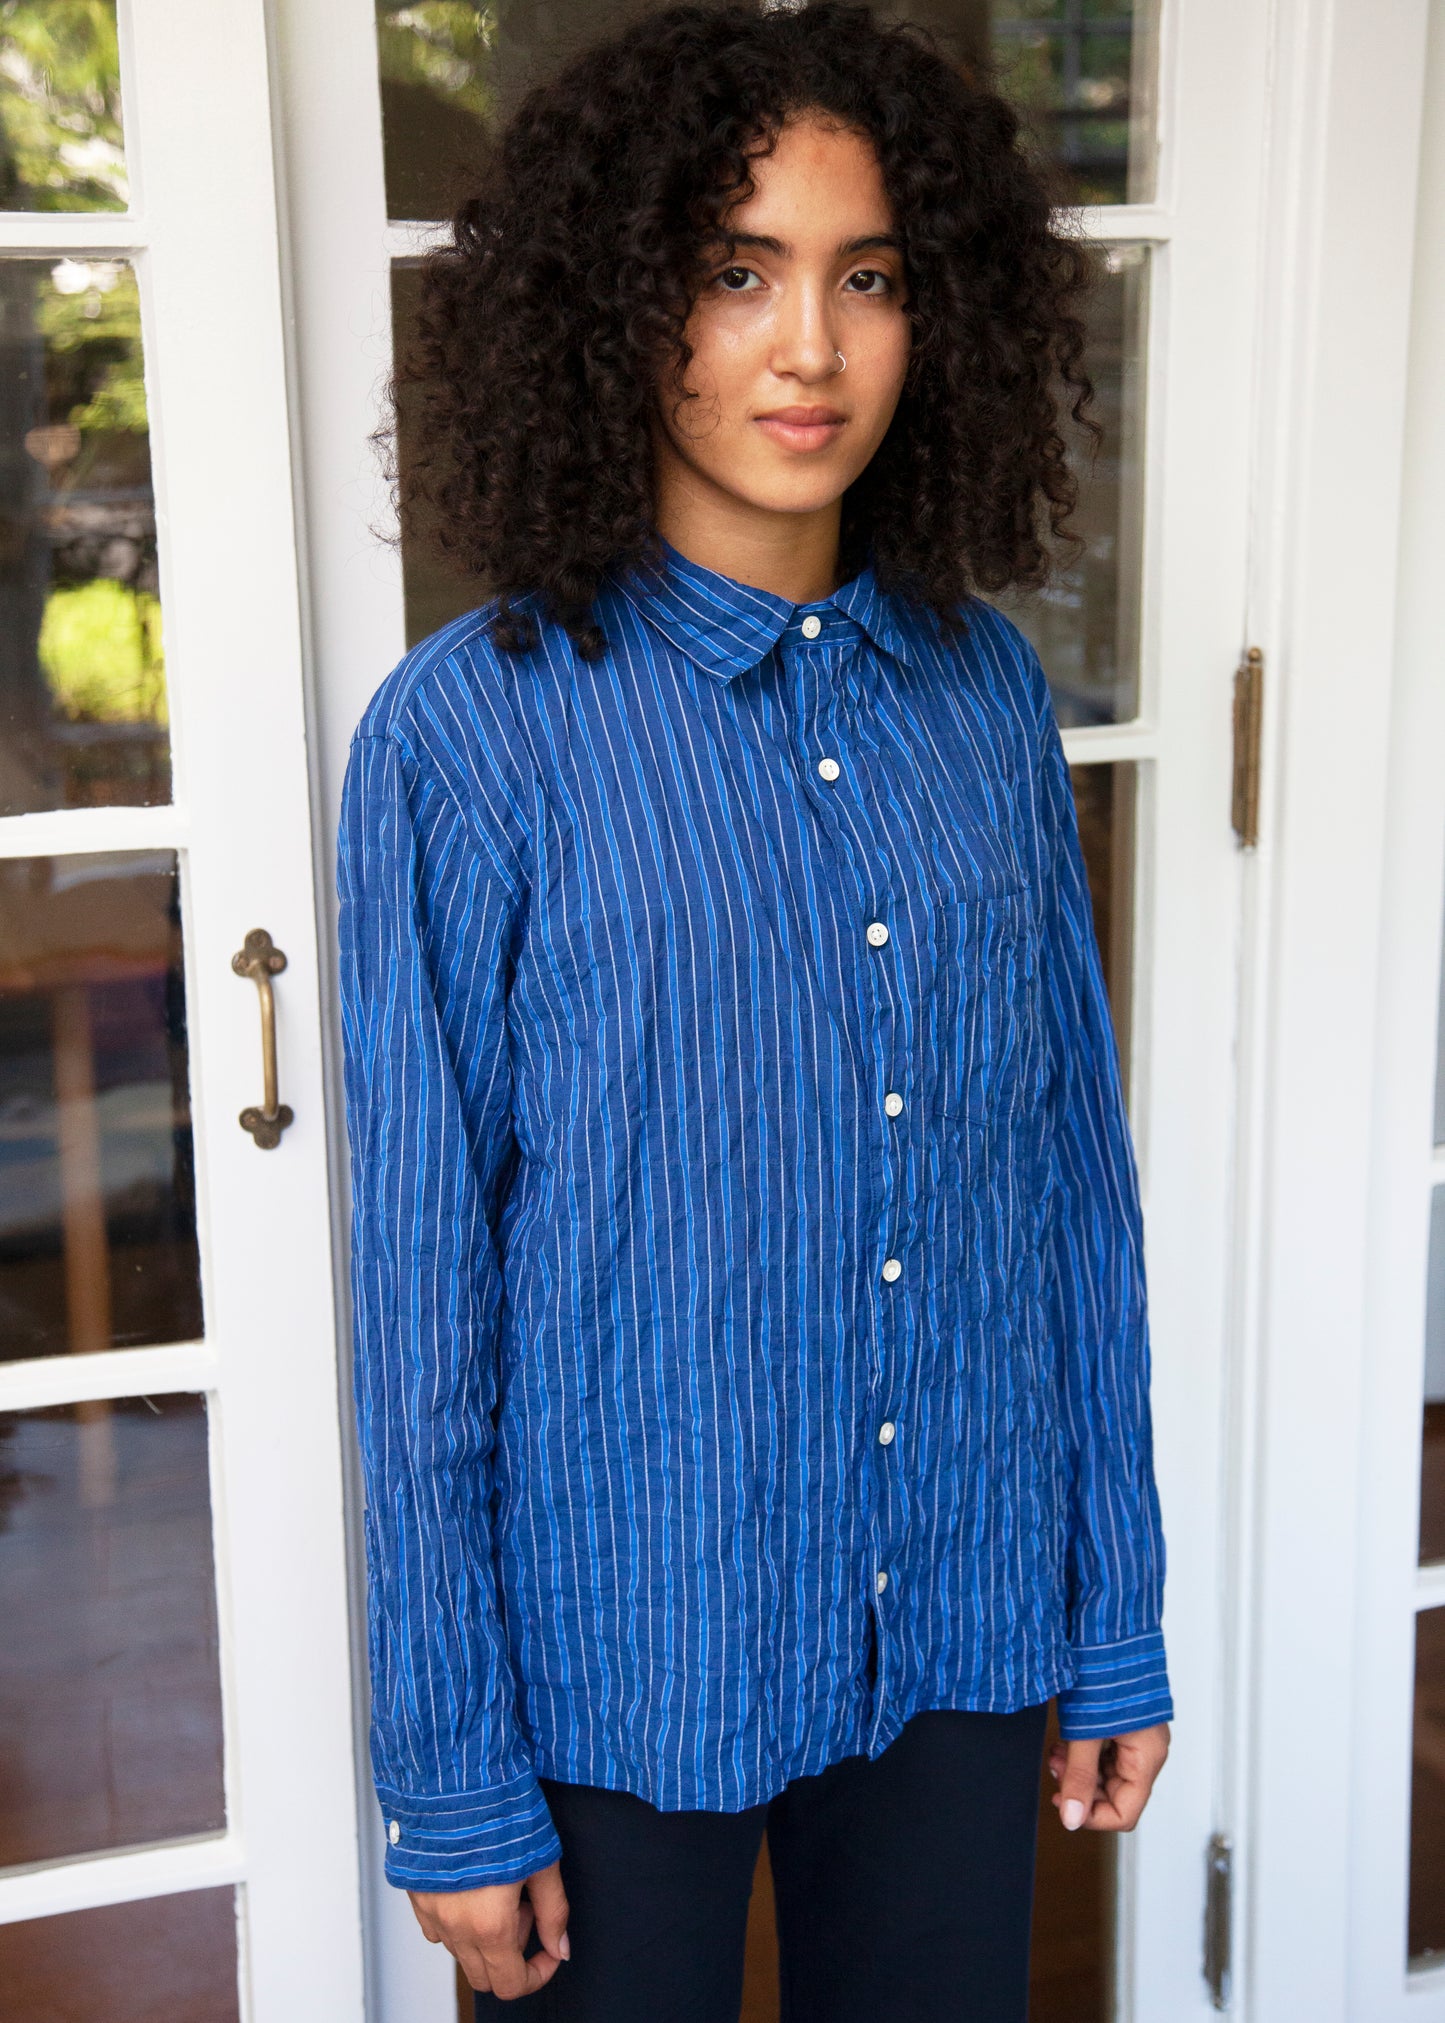 notch shirt in dark blue stripe on female model standing 